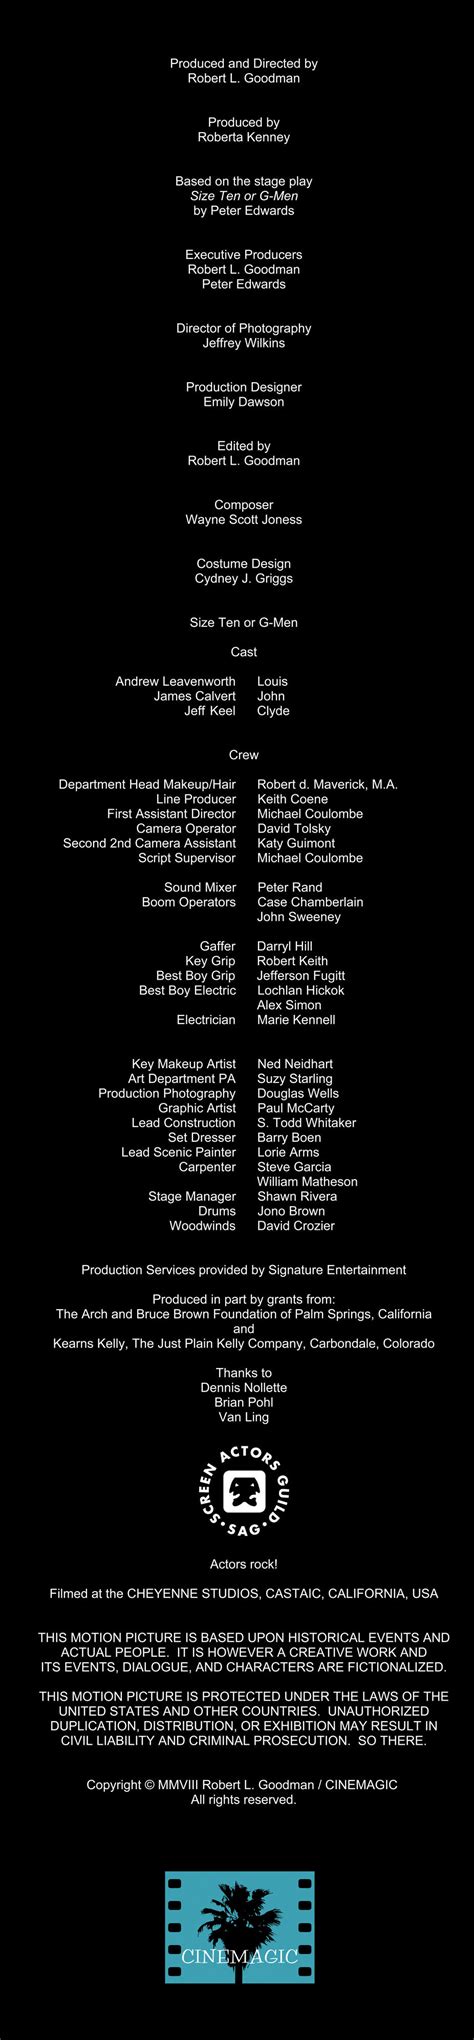 Max Planck lyrics credits, cast, crew of song